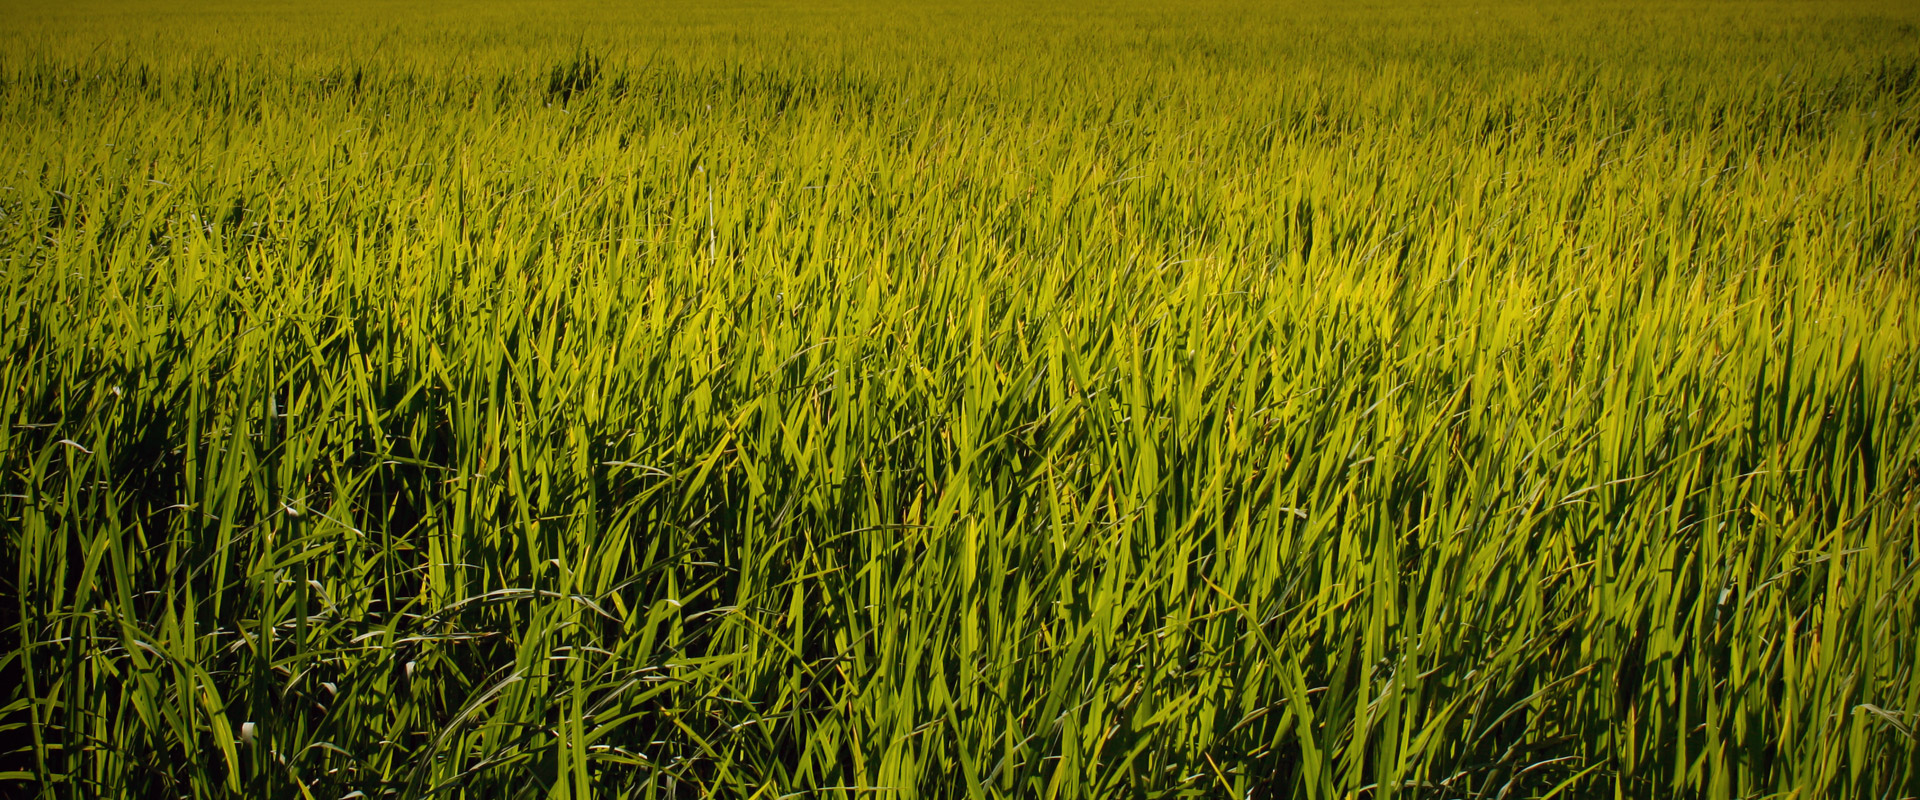 Rice field in Pego Oliva Marjal